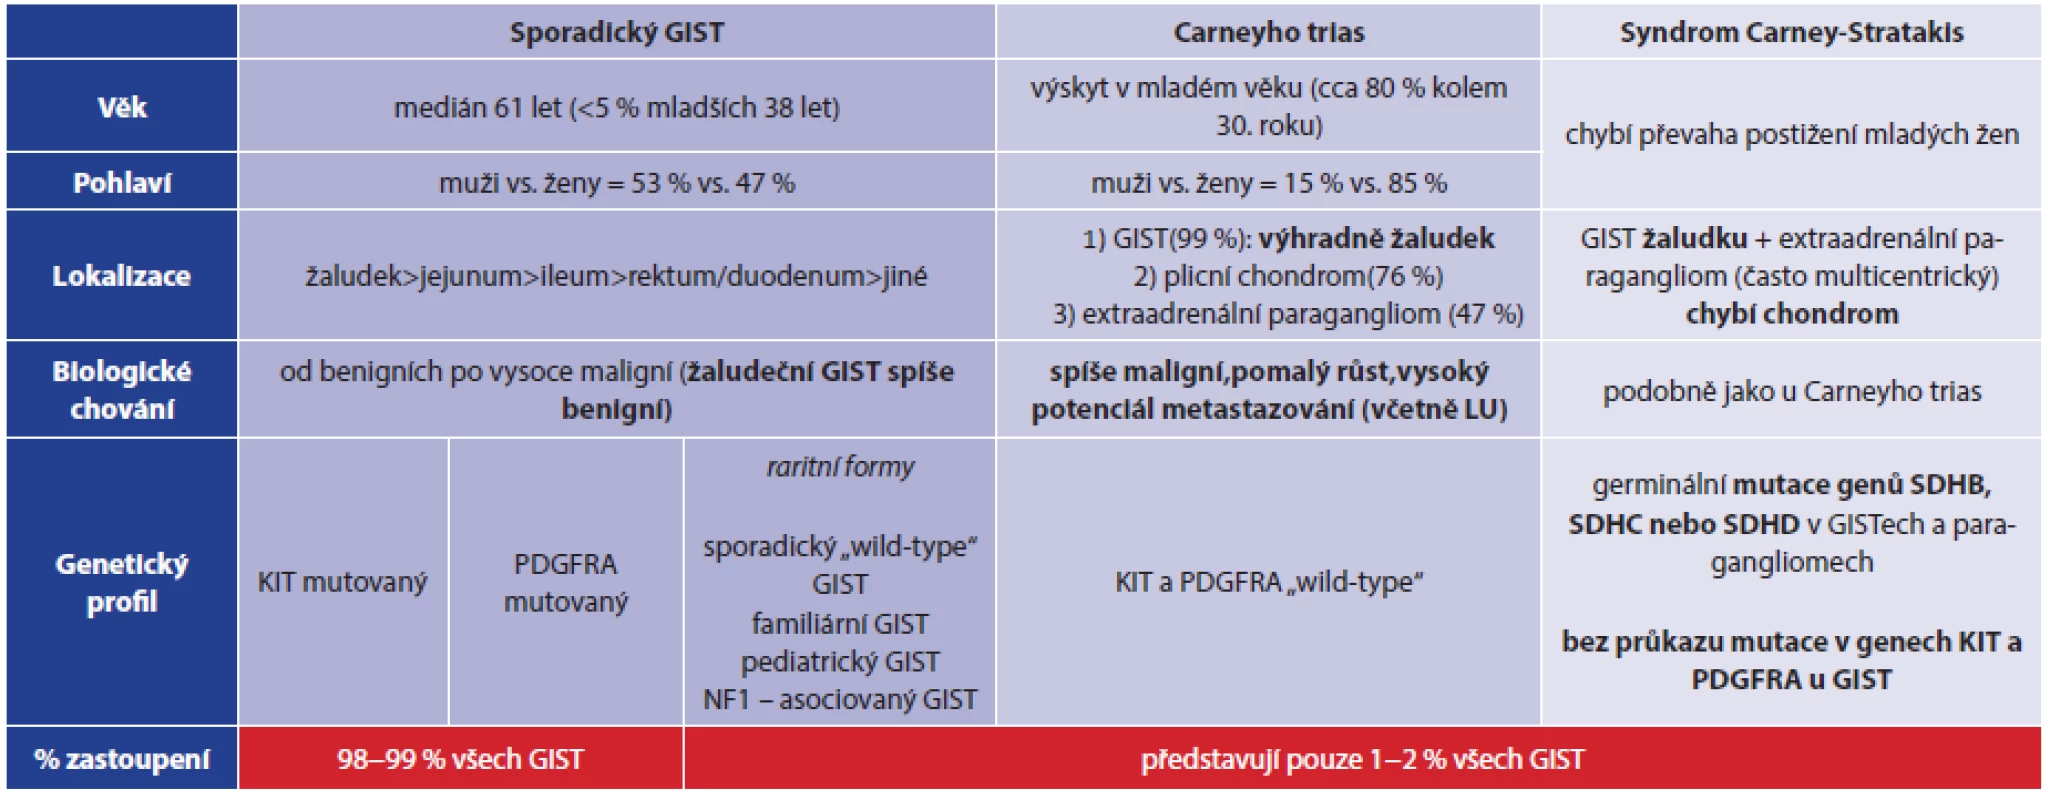 Srovnání sporadického GIST a GIST u Carneyho triády a syndromu Carney-Stratakis
Tab. 2: Comparison of sporadic GIST and GIST in Carney triad and Carney-Stratakis syndrome